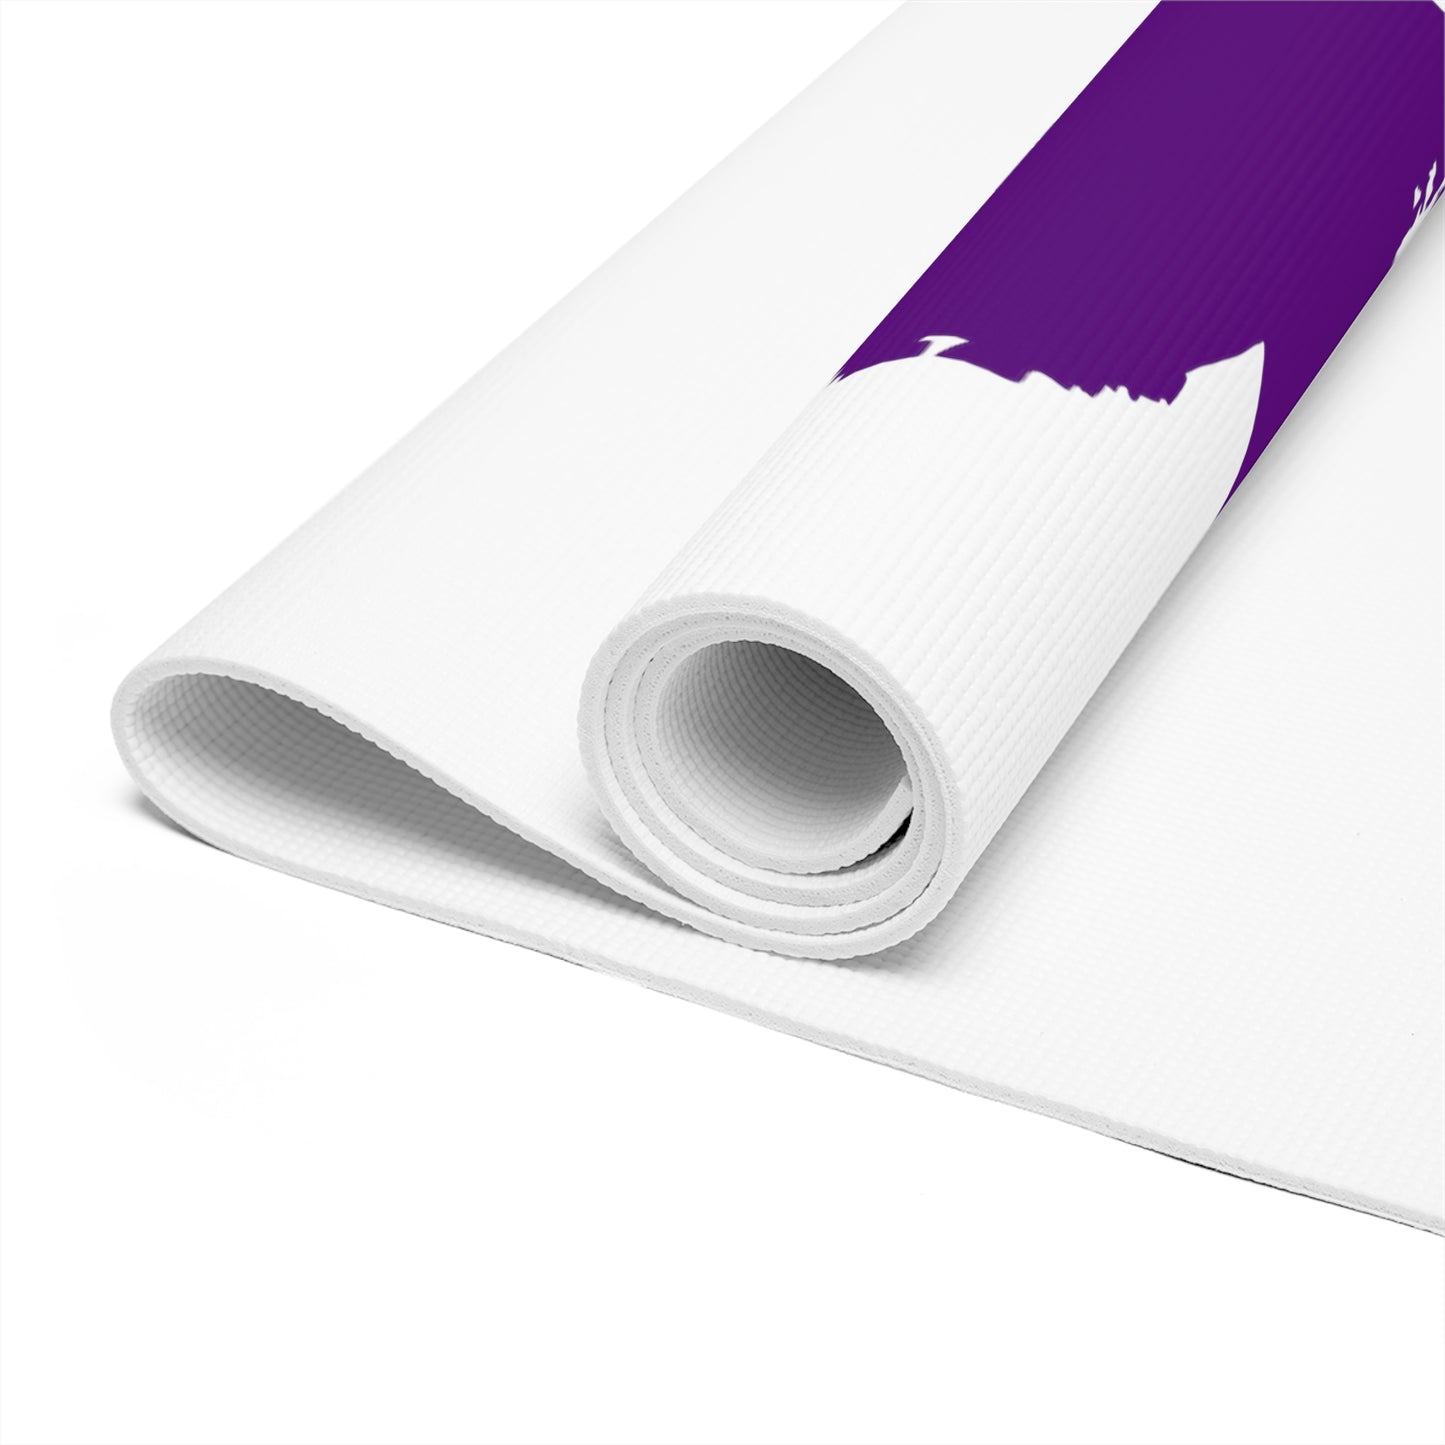 White Foam Yoga Mat - Los Angeles Purple Yellow